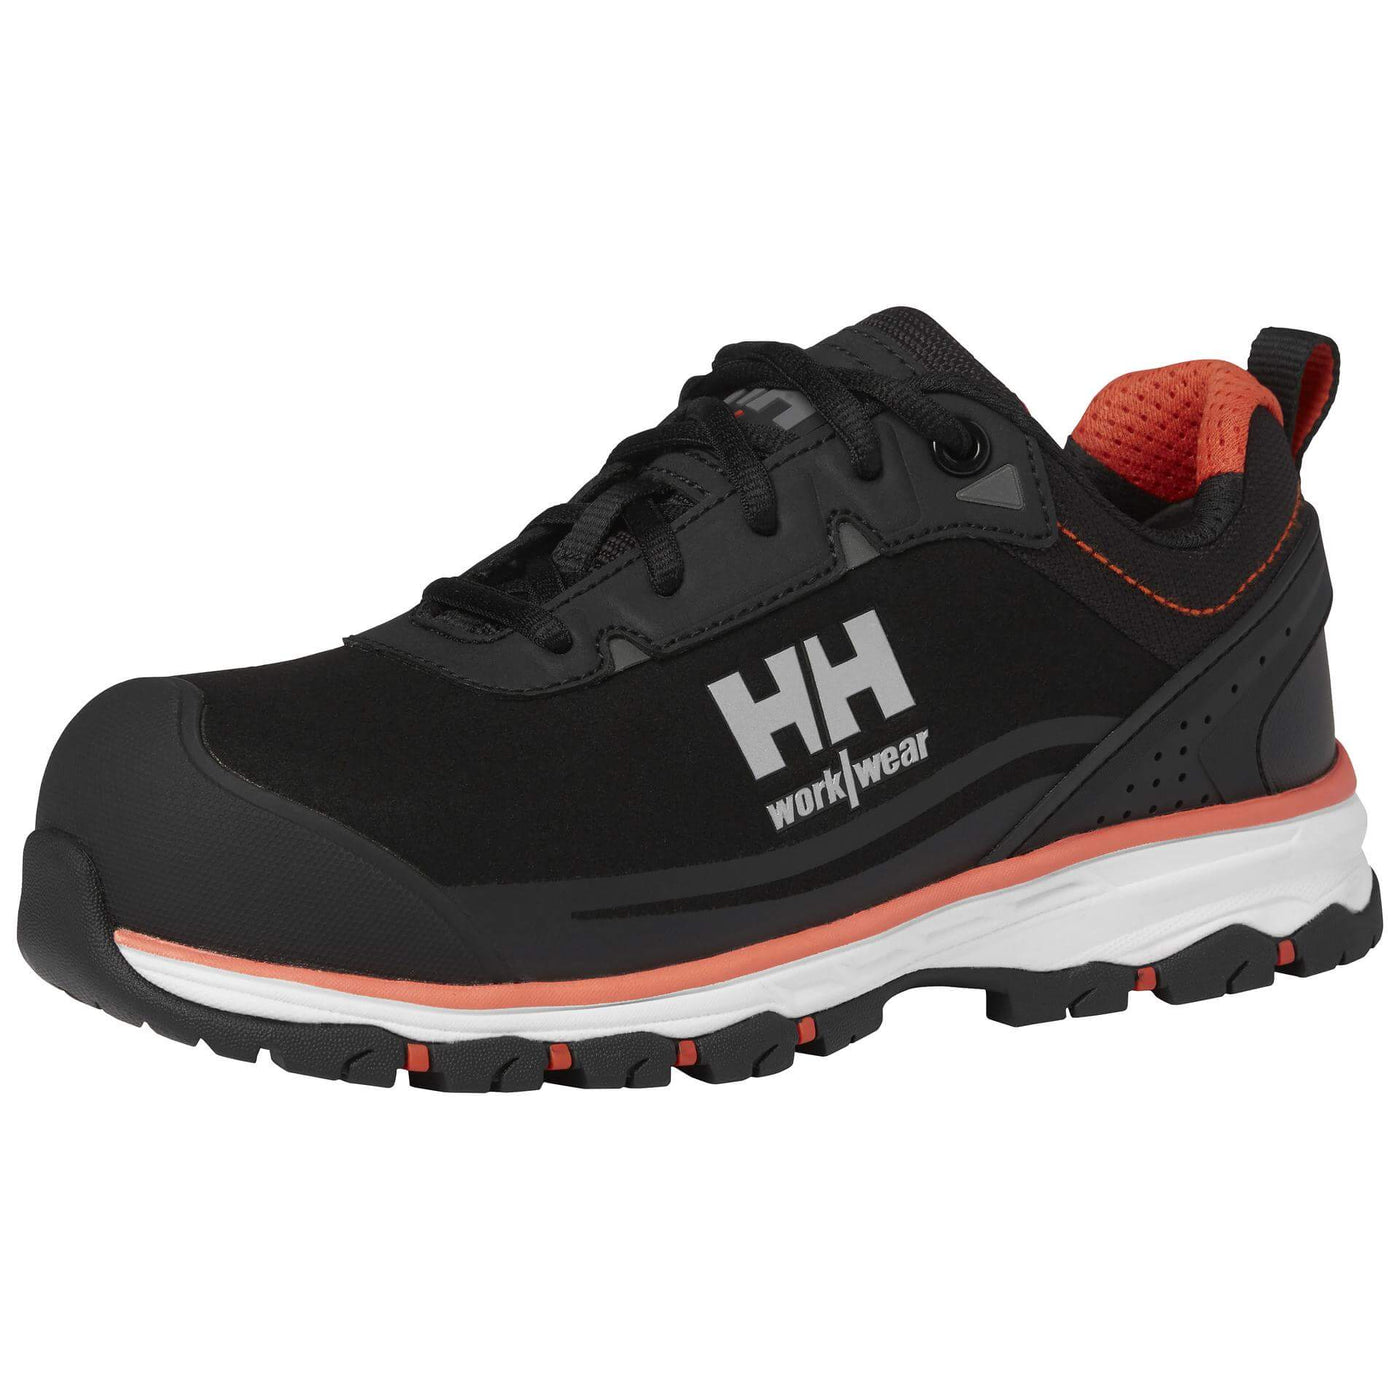 Helly Hansen Womens Luna 2 Low S3 Lightweight Safety Shoes Black/Orange Front#colour_black-orange